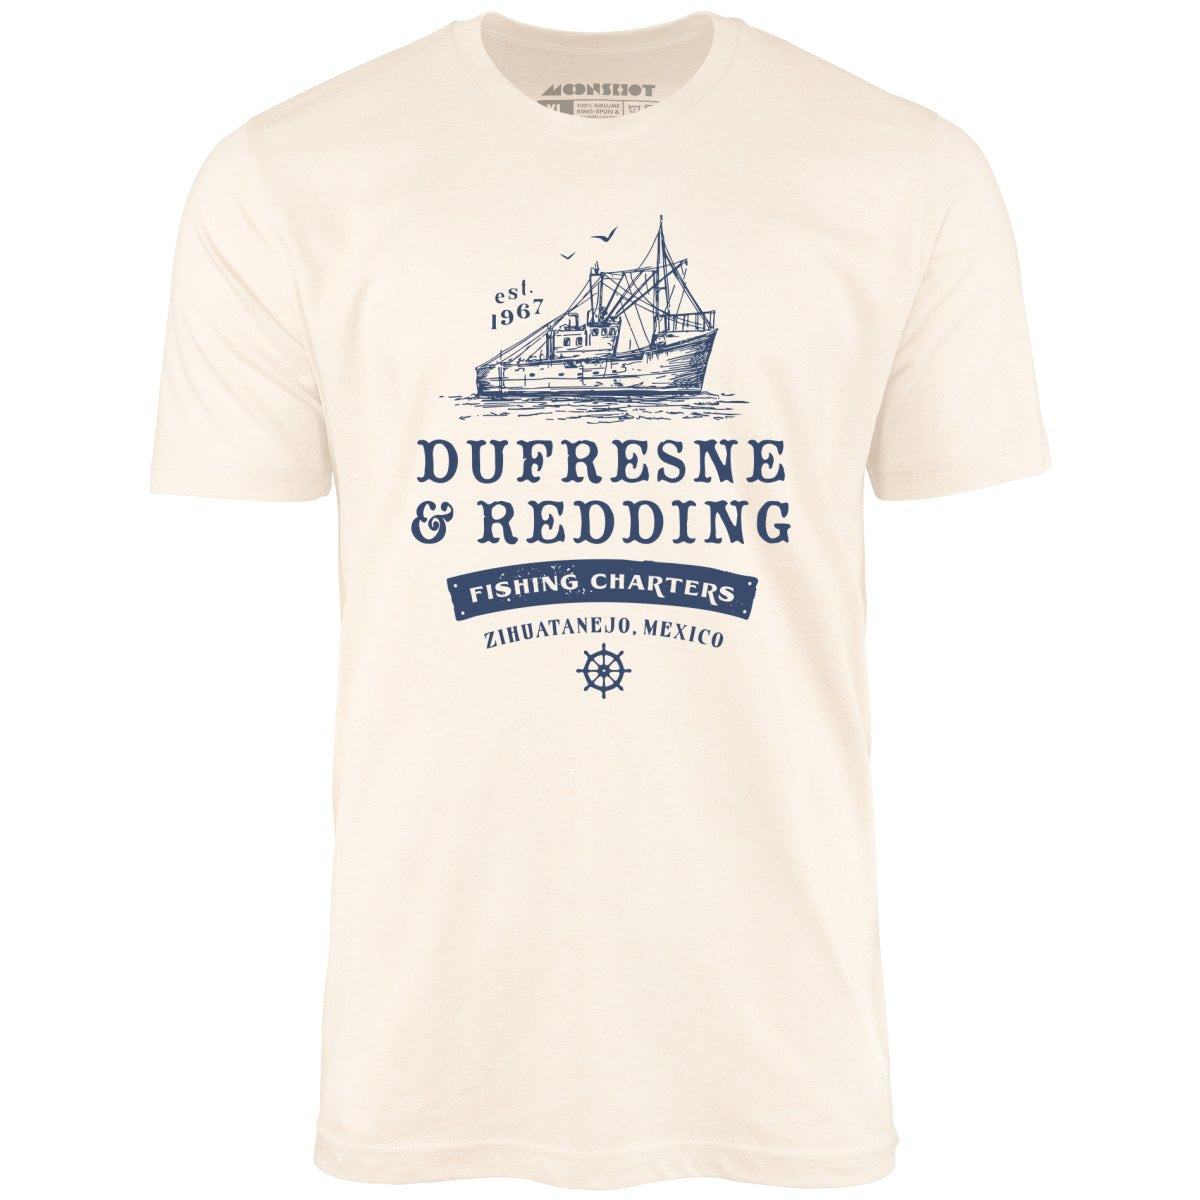 Dufresne & Redding Fishing Charters - unisex T-Shirt Natural / S